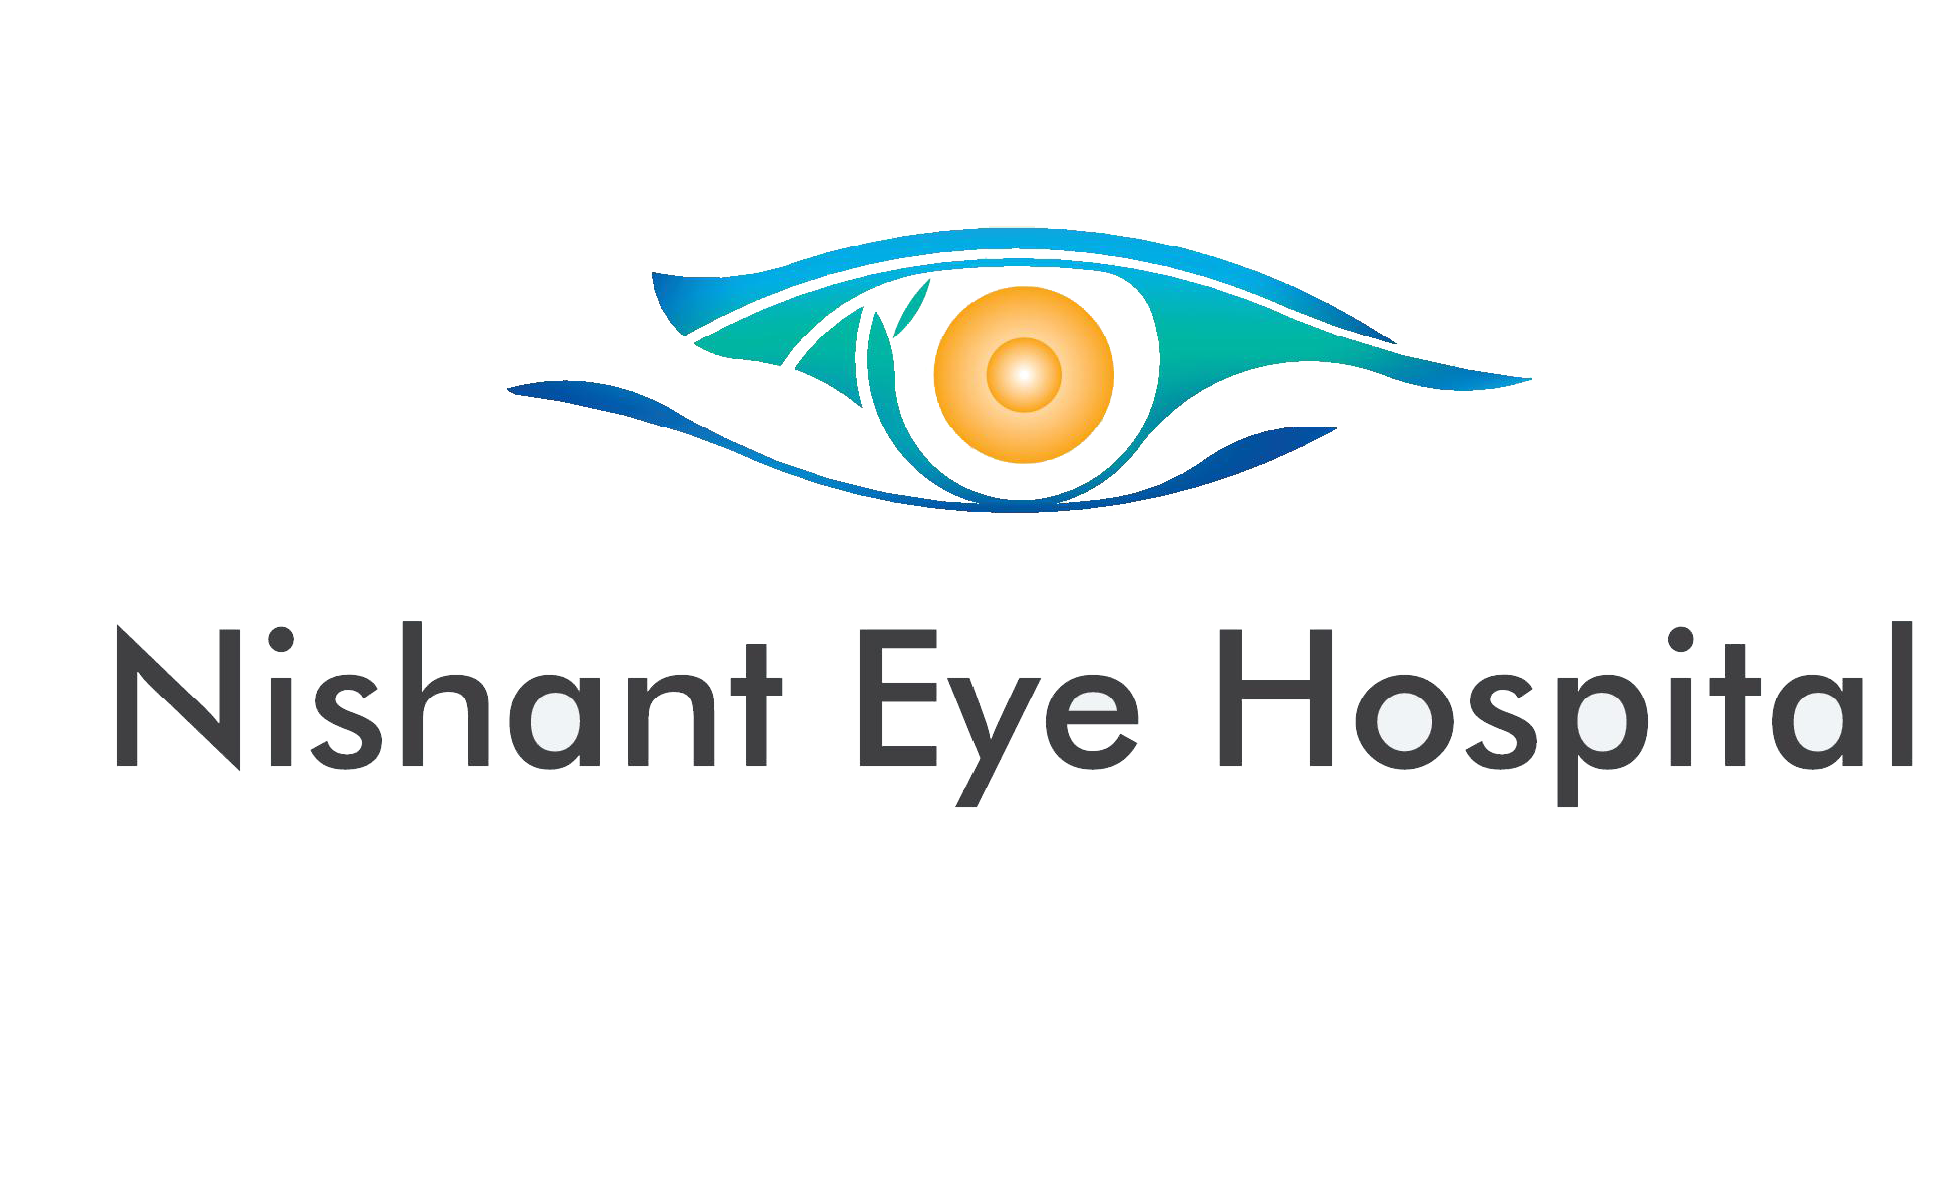 Nishant Eye Hospital|Hospitals|Medical Services